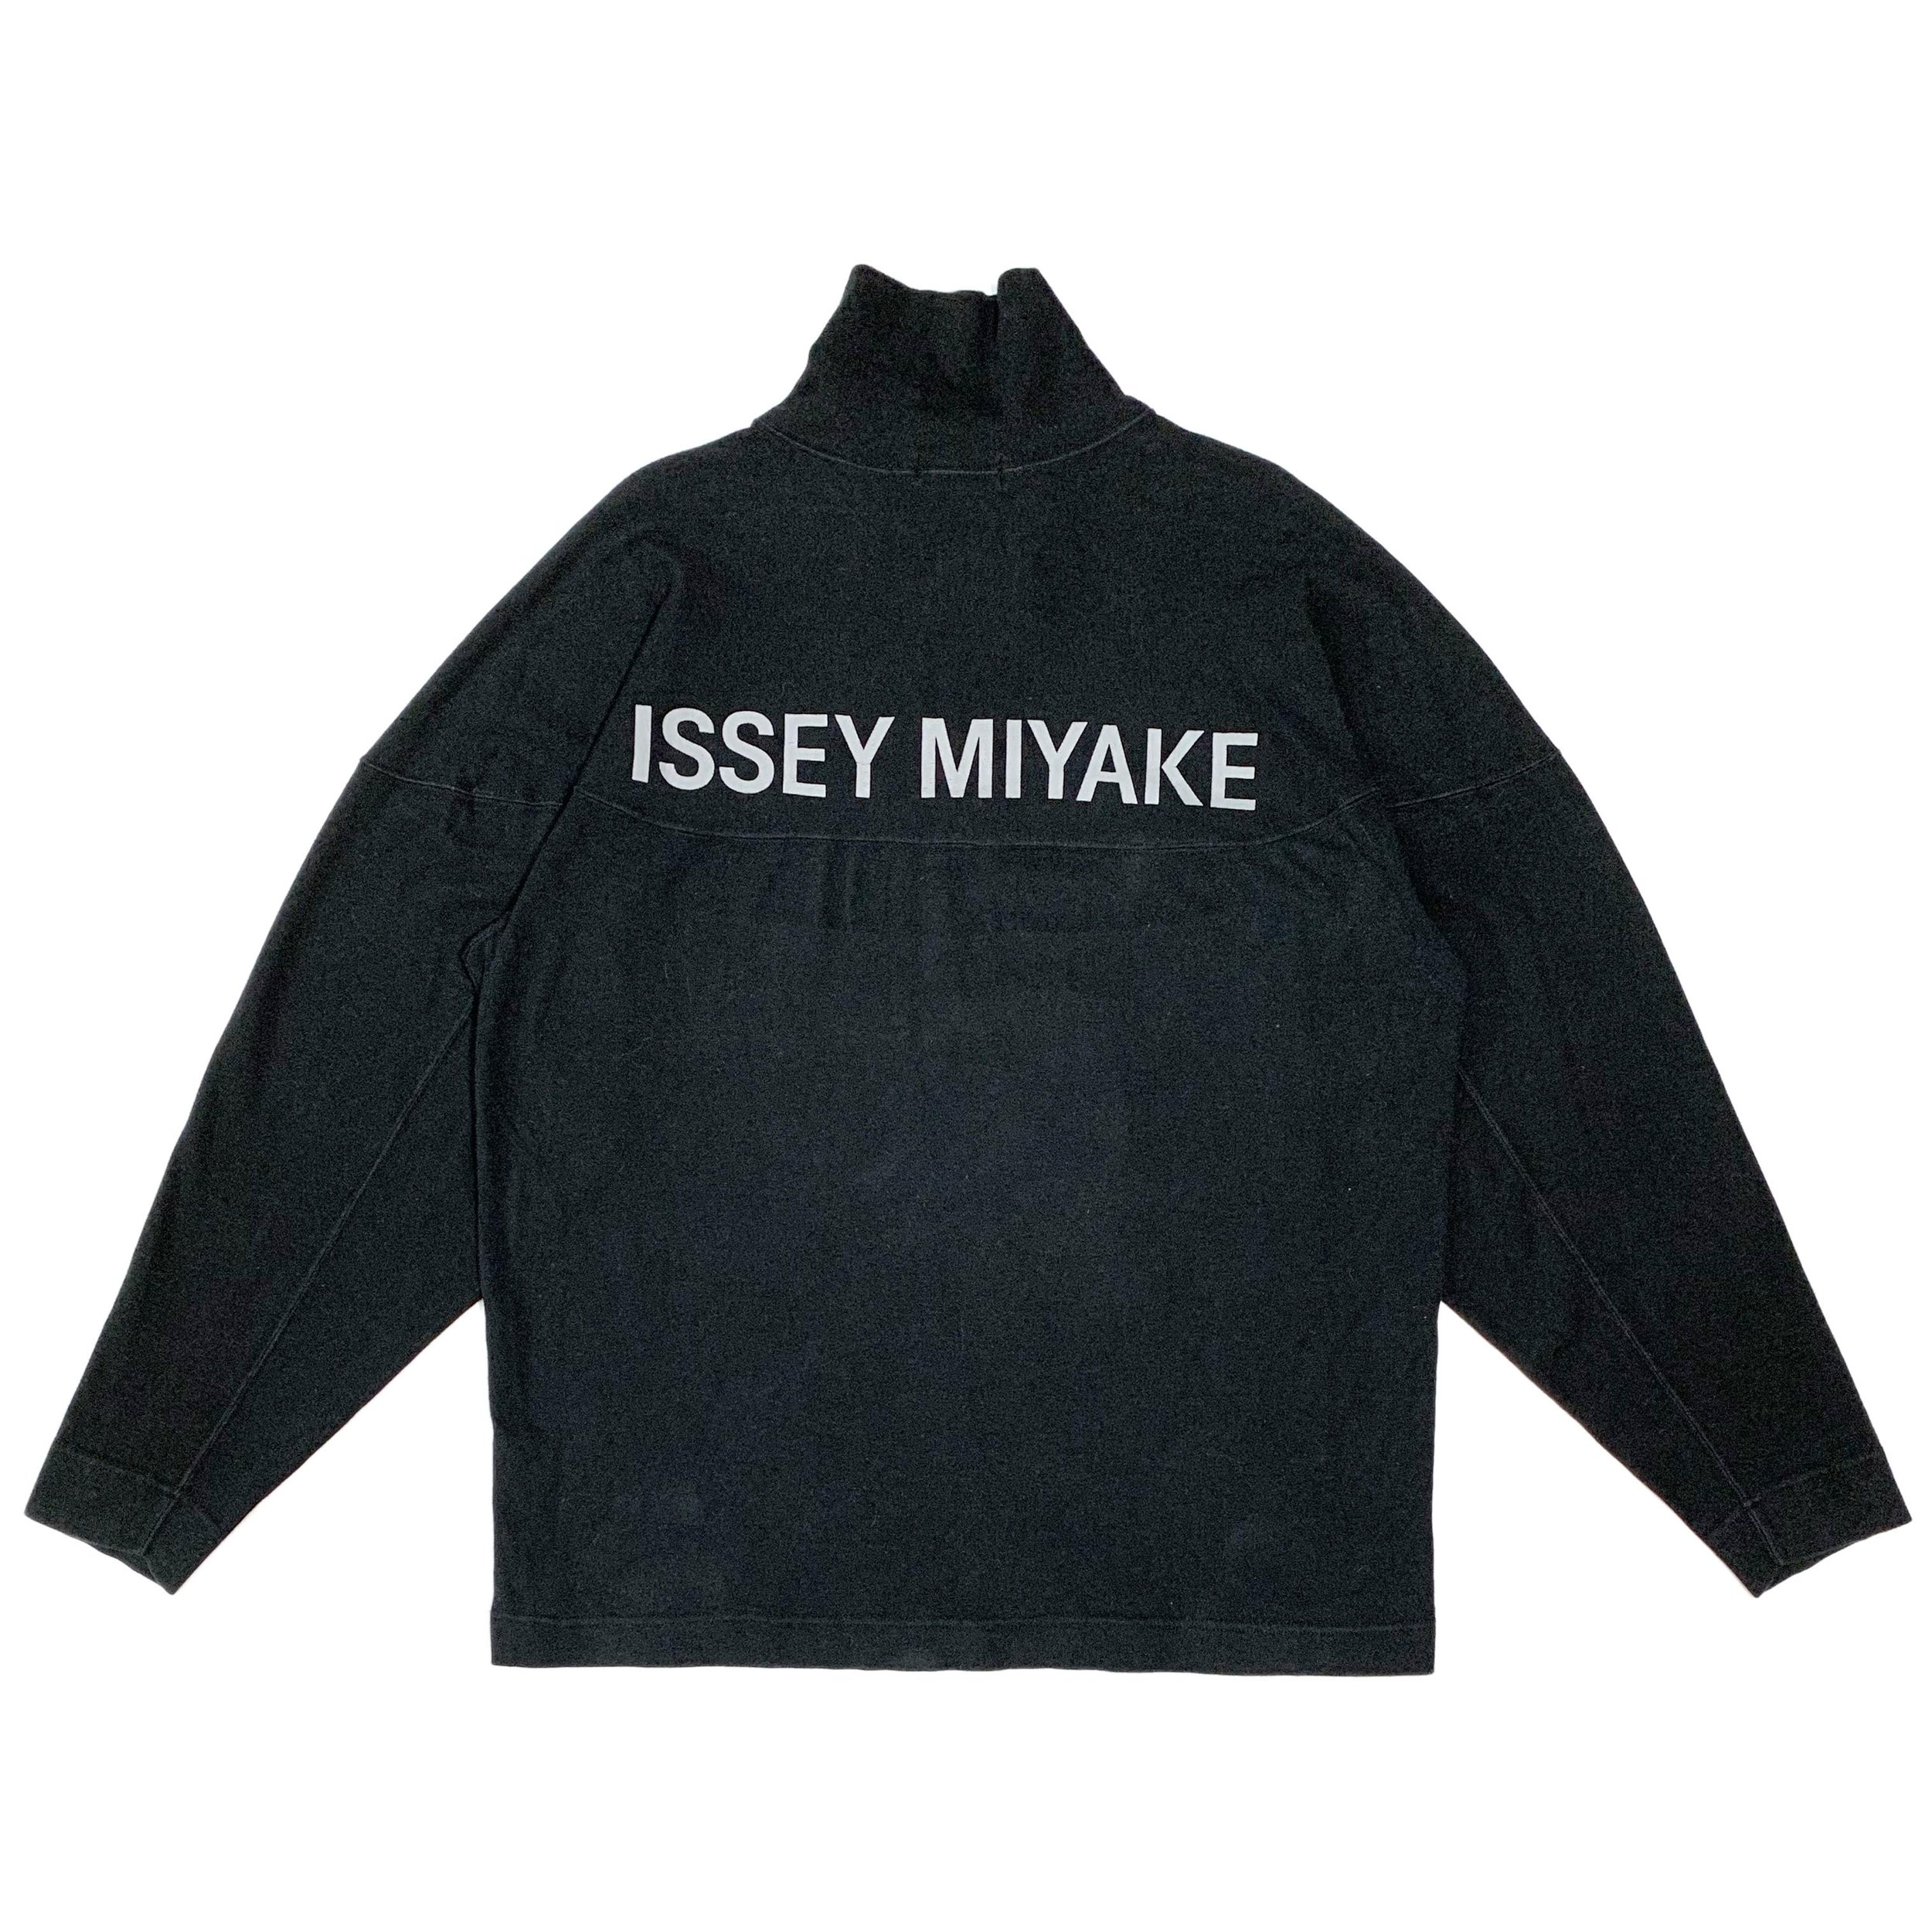 Issey Miyake — My Clothing Archive